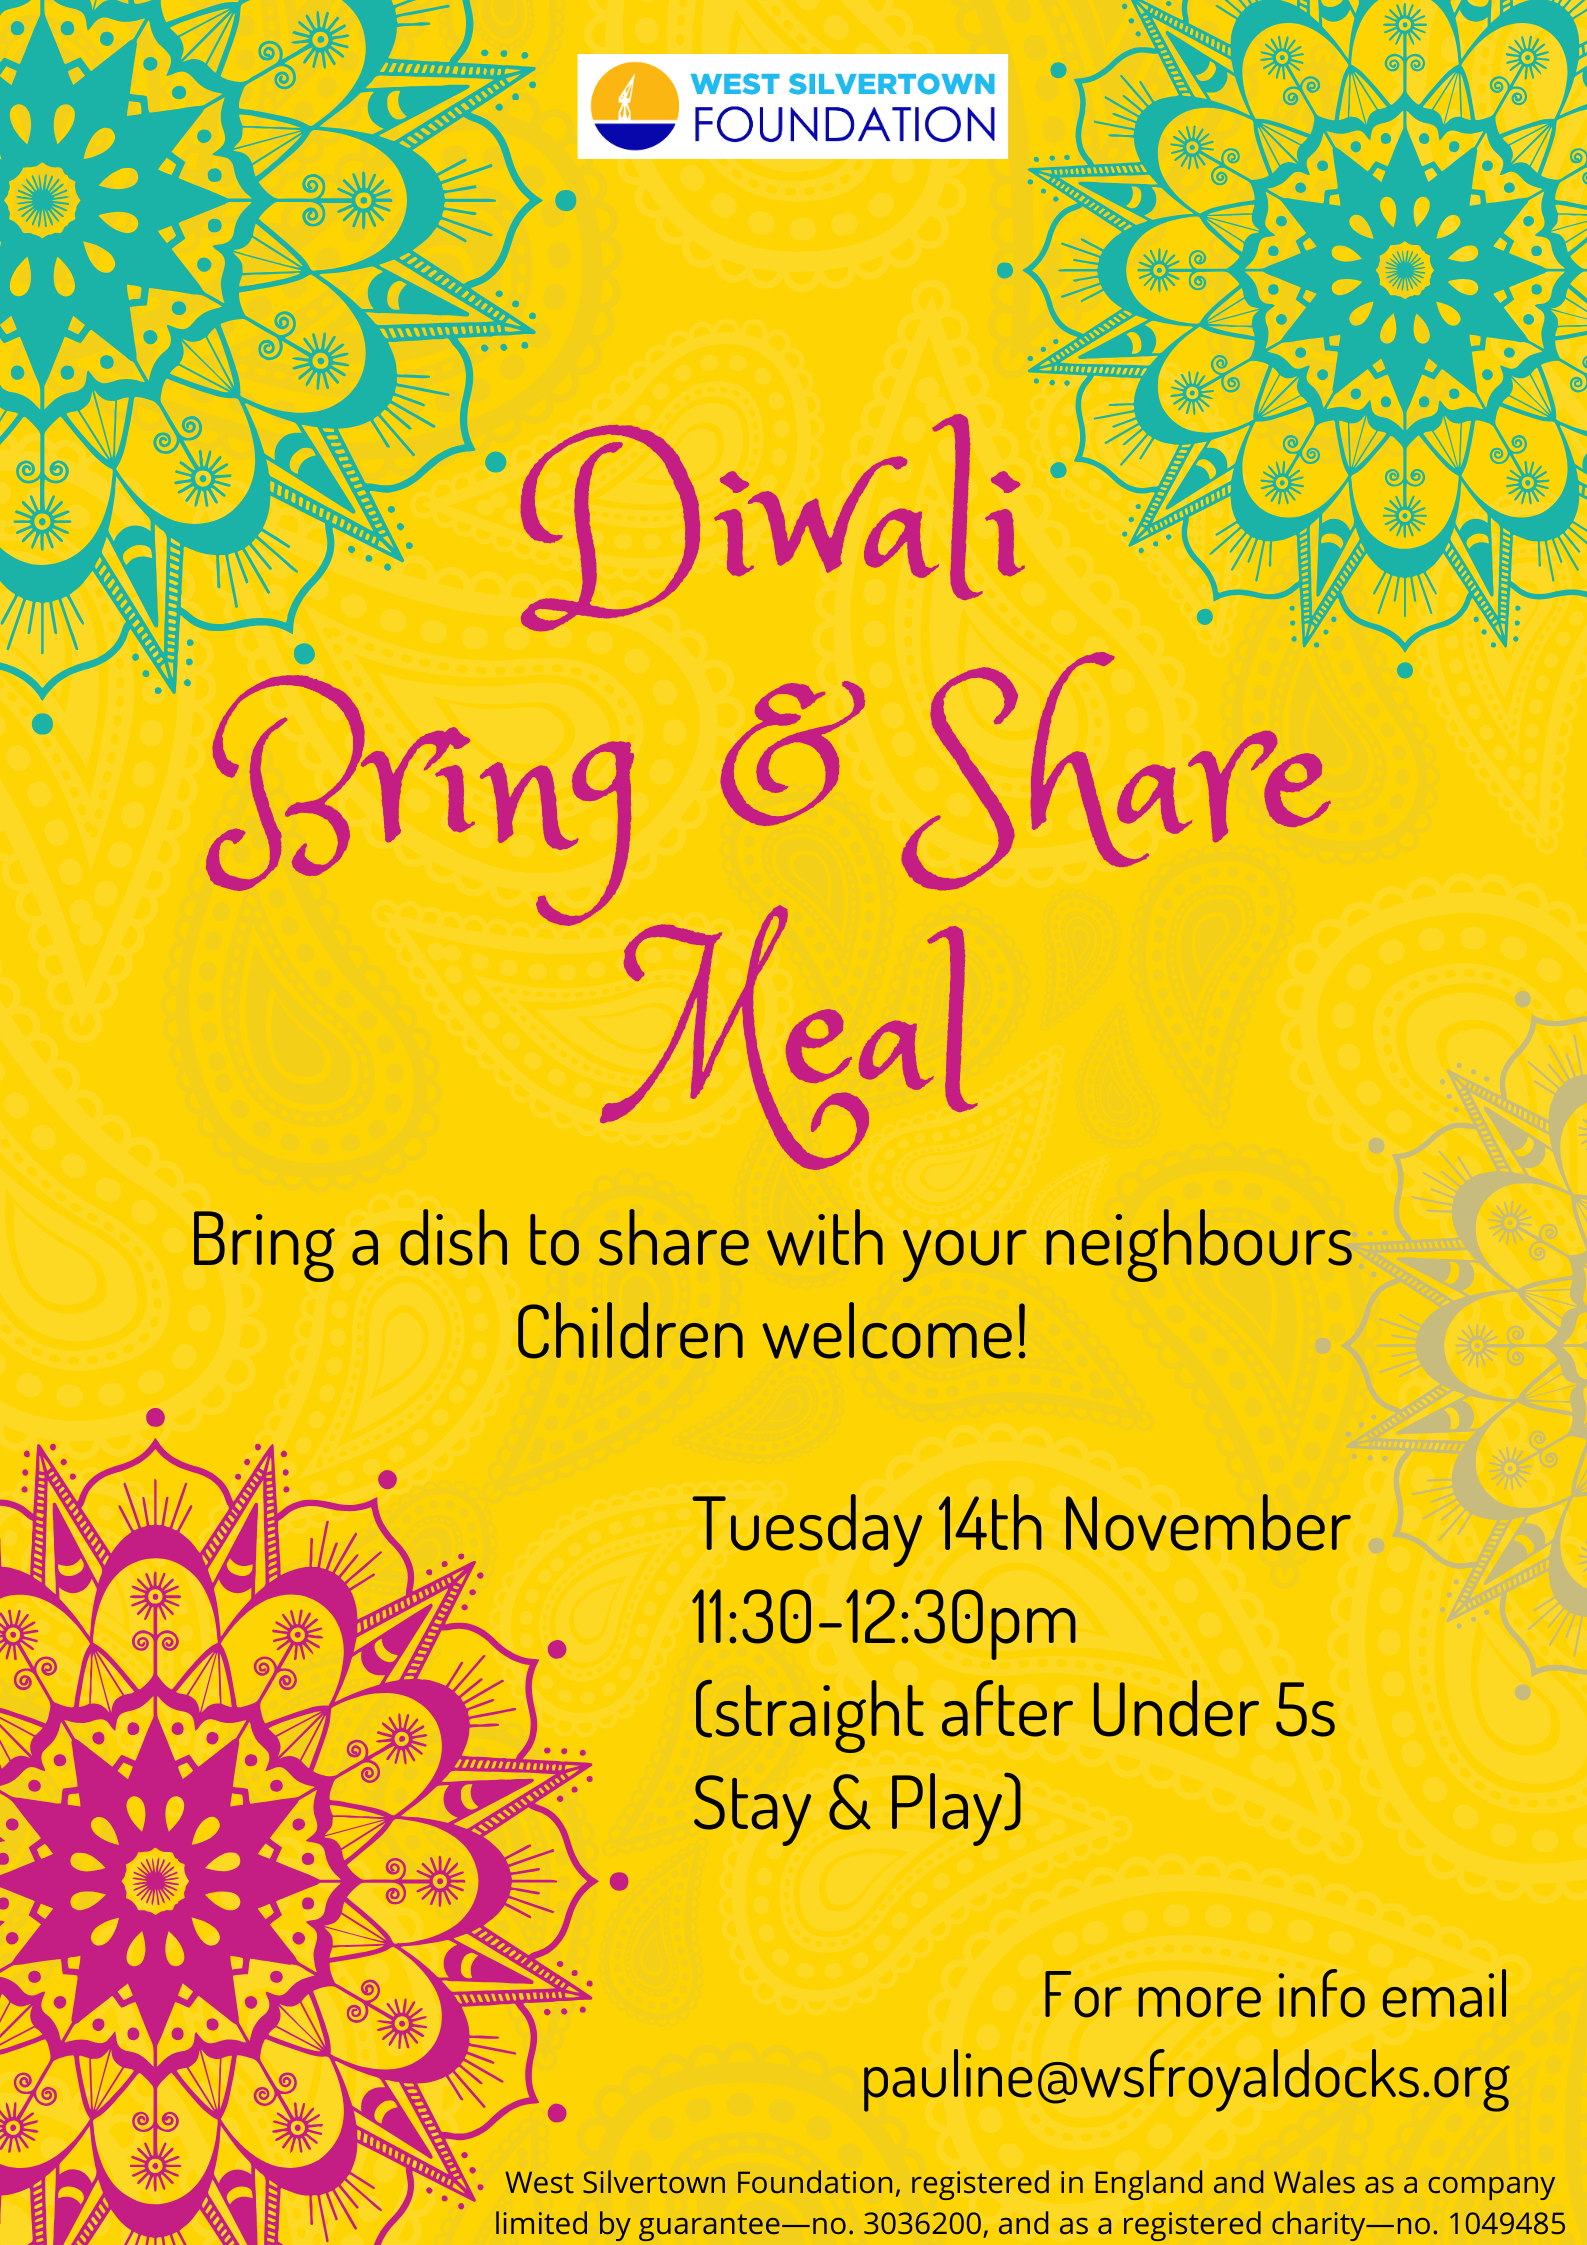 Diwali Bring & Share meal